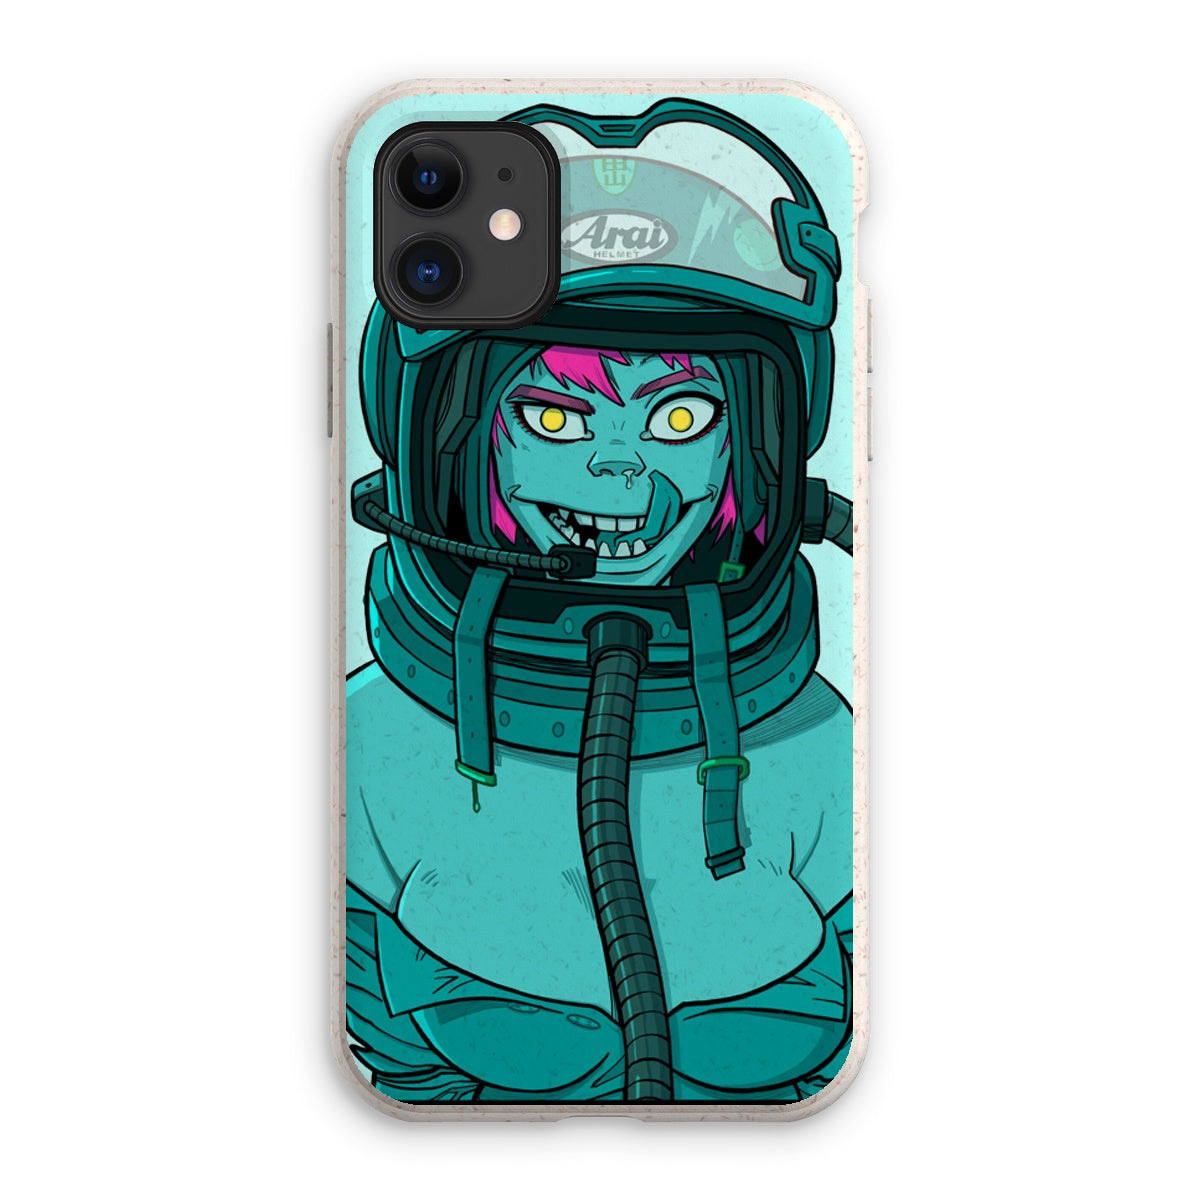 Unique and cool Gorillaz-style lunatic phone case illustration